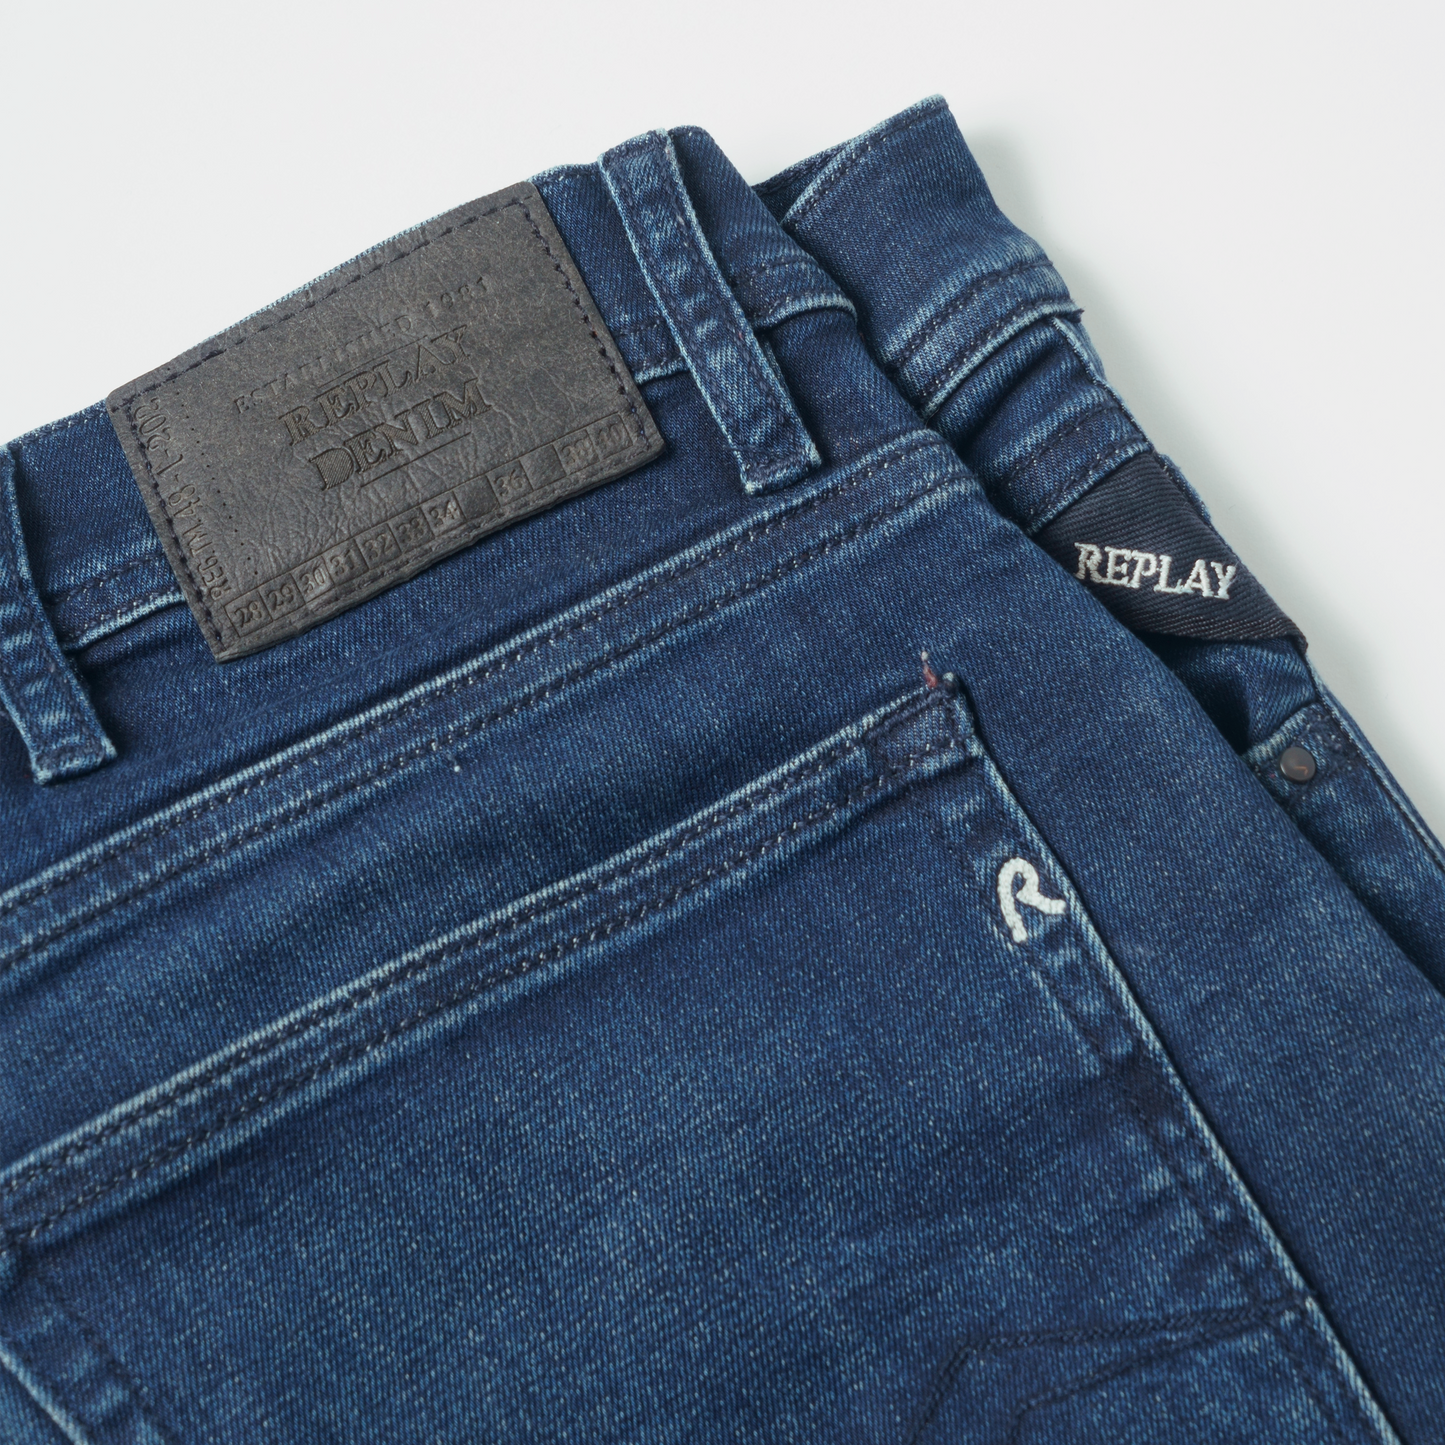 Dries patterned slim jeans